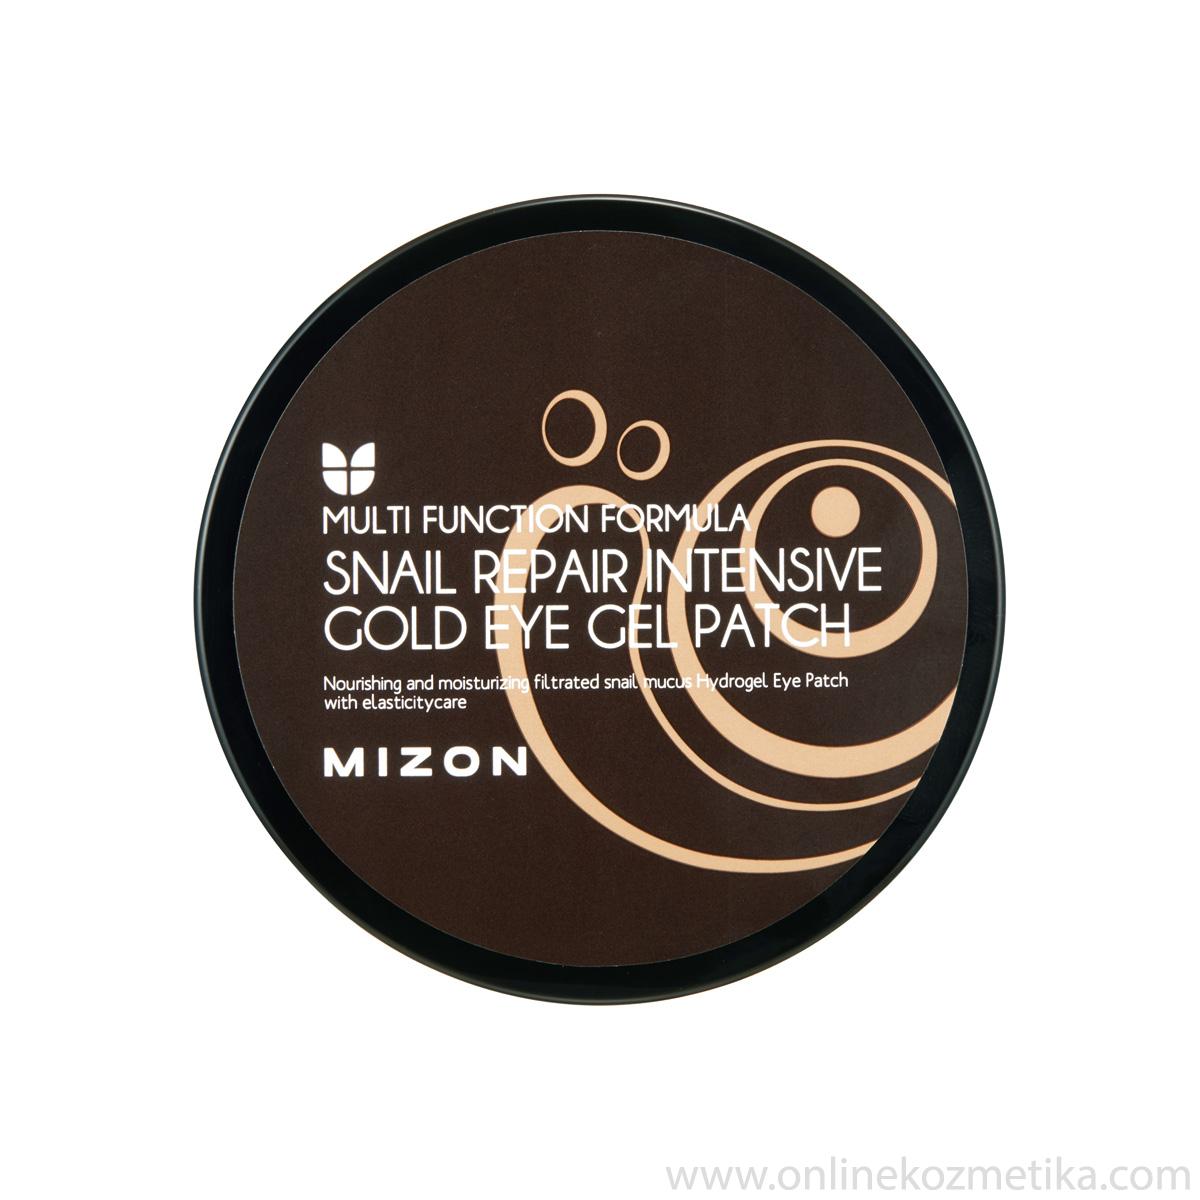 Mizon Snail Repair Intensive Gold Eye Gel Patch 